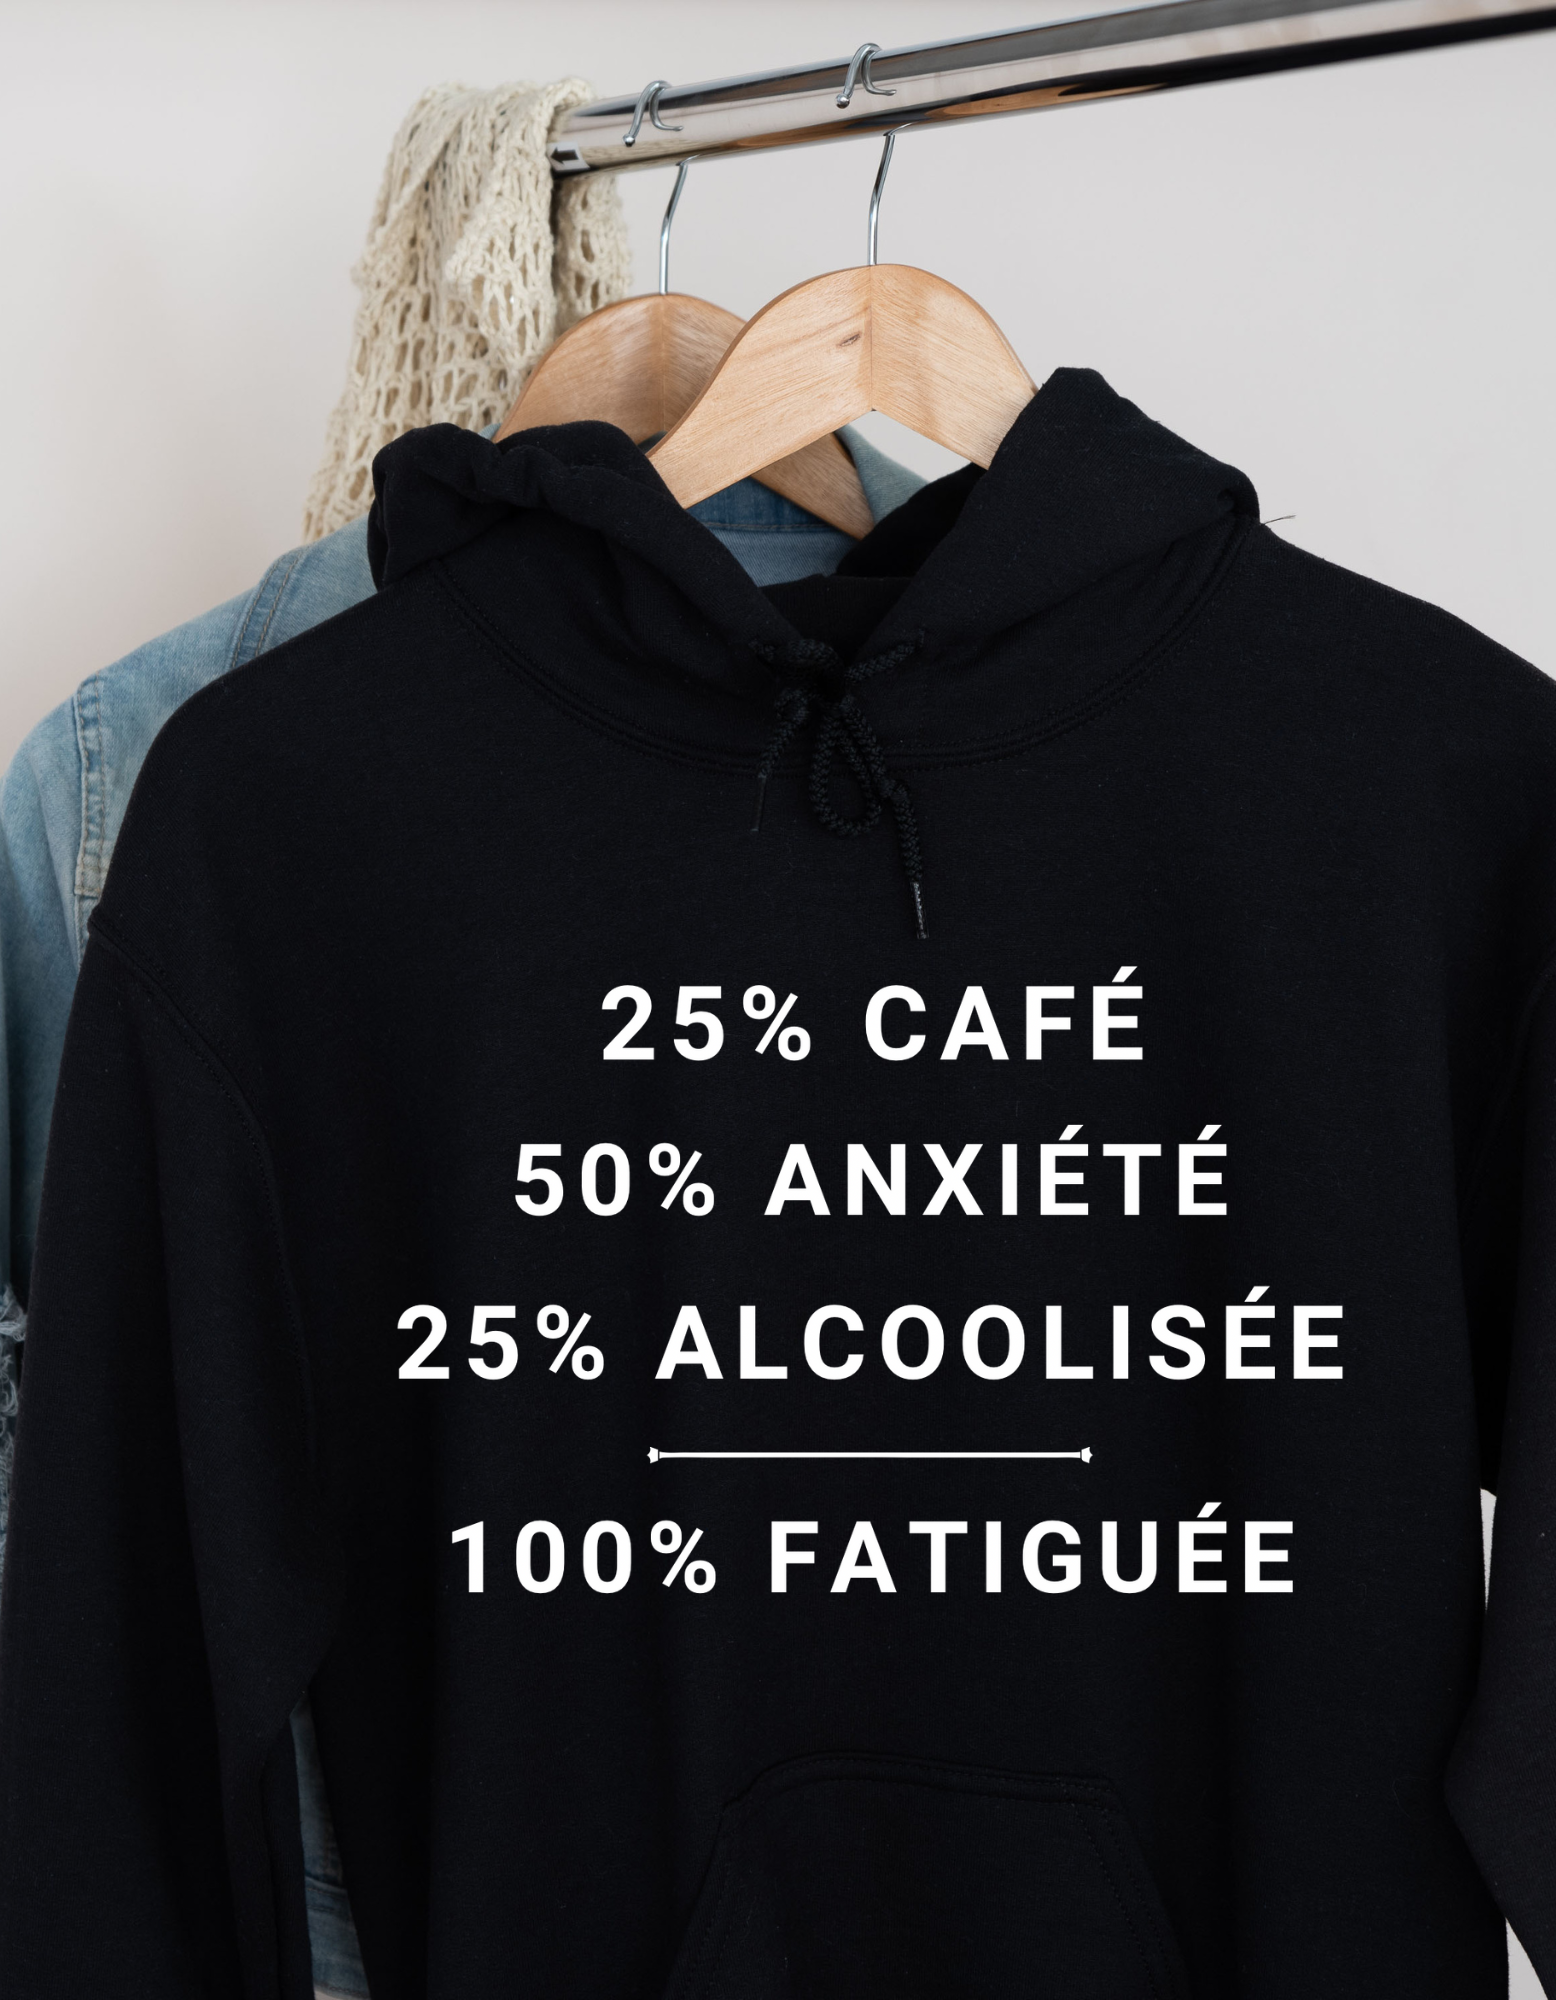 Kangourou - 25% café, 50% anxiété, 25% alcoolisée, 100% fatiguée